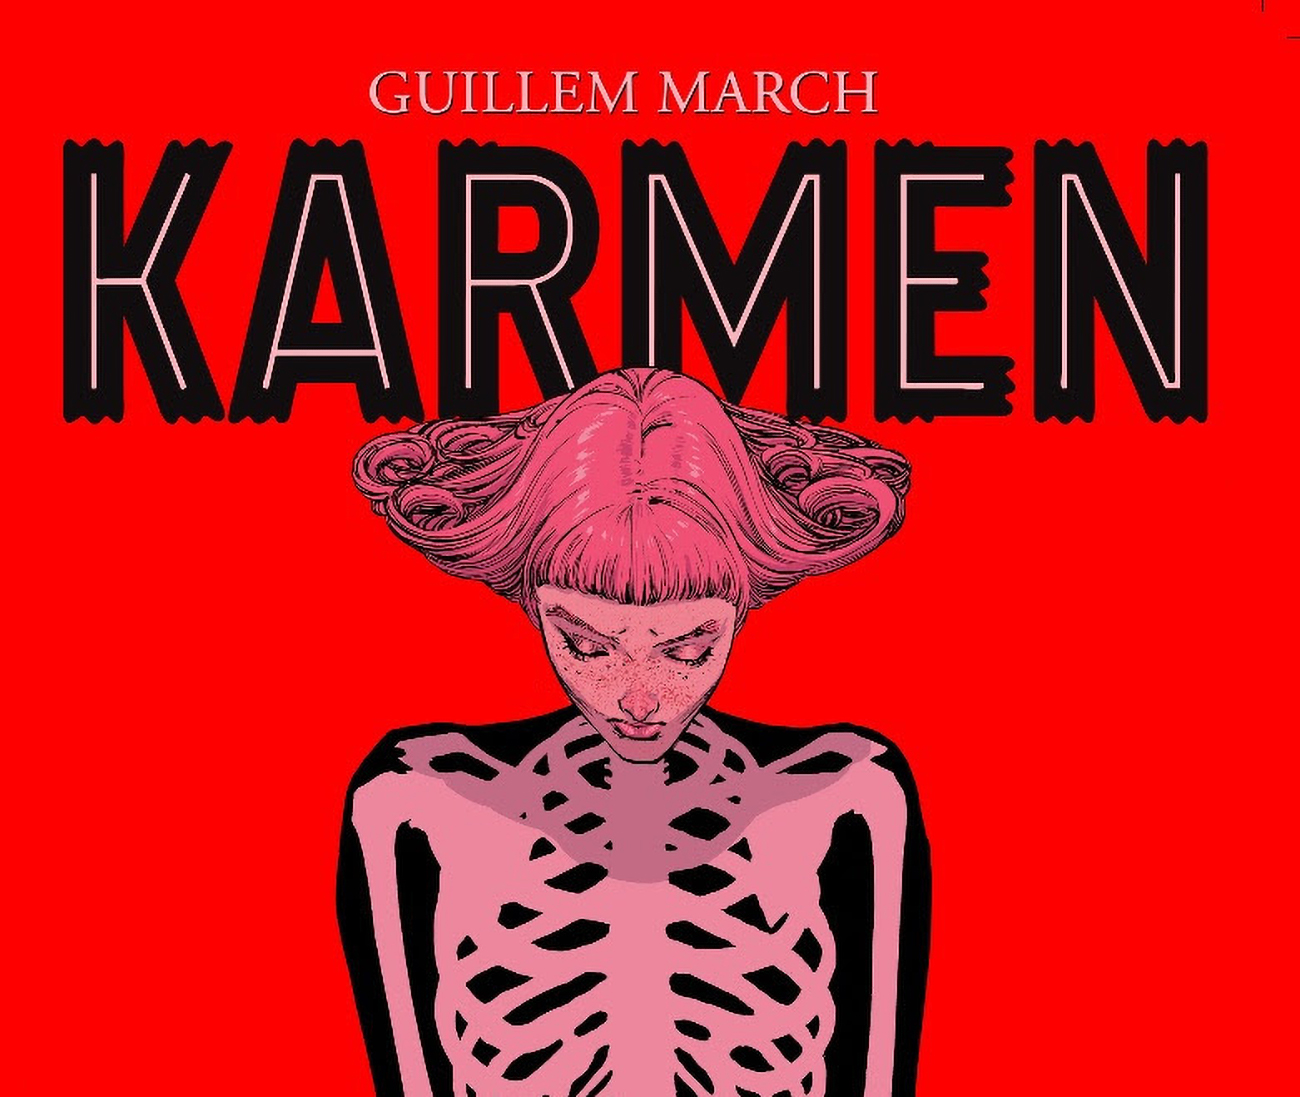 Image Comics to publish Guillem March's 'Karmen' for U.S. release March 2021